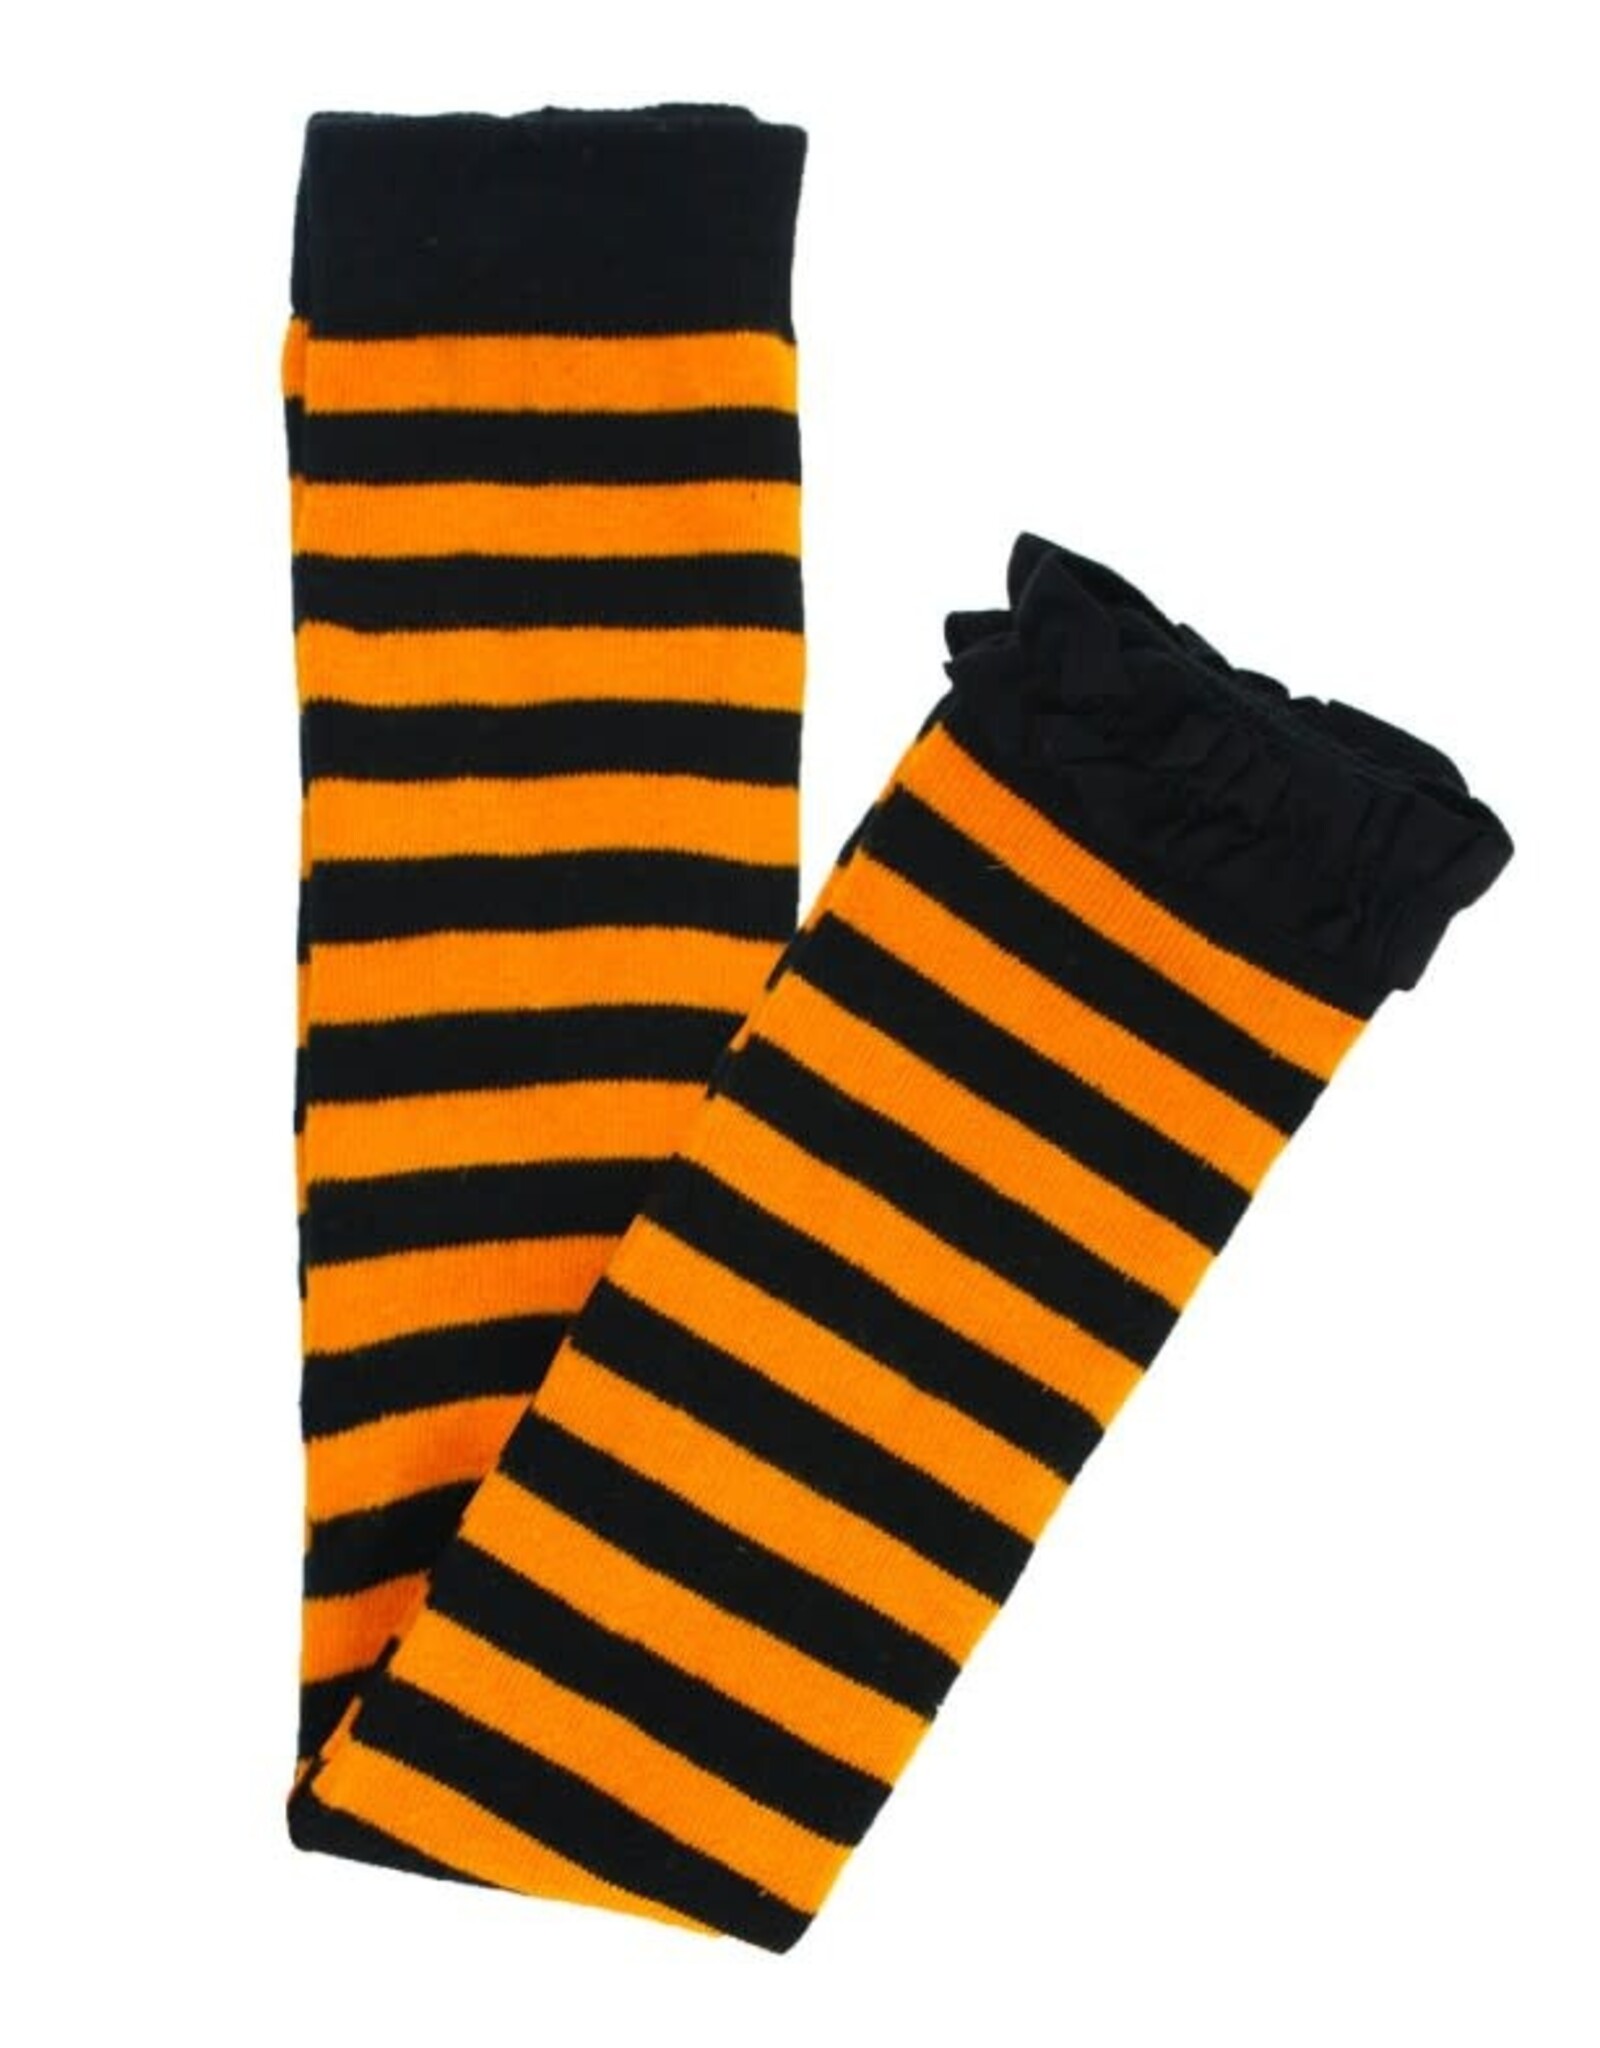 Ruffle Butts Ruffle Butts - Orange/Black Striped Footless Ruffle Tights